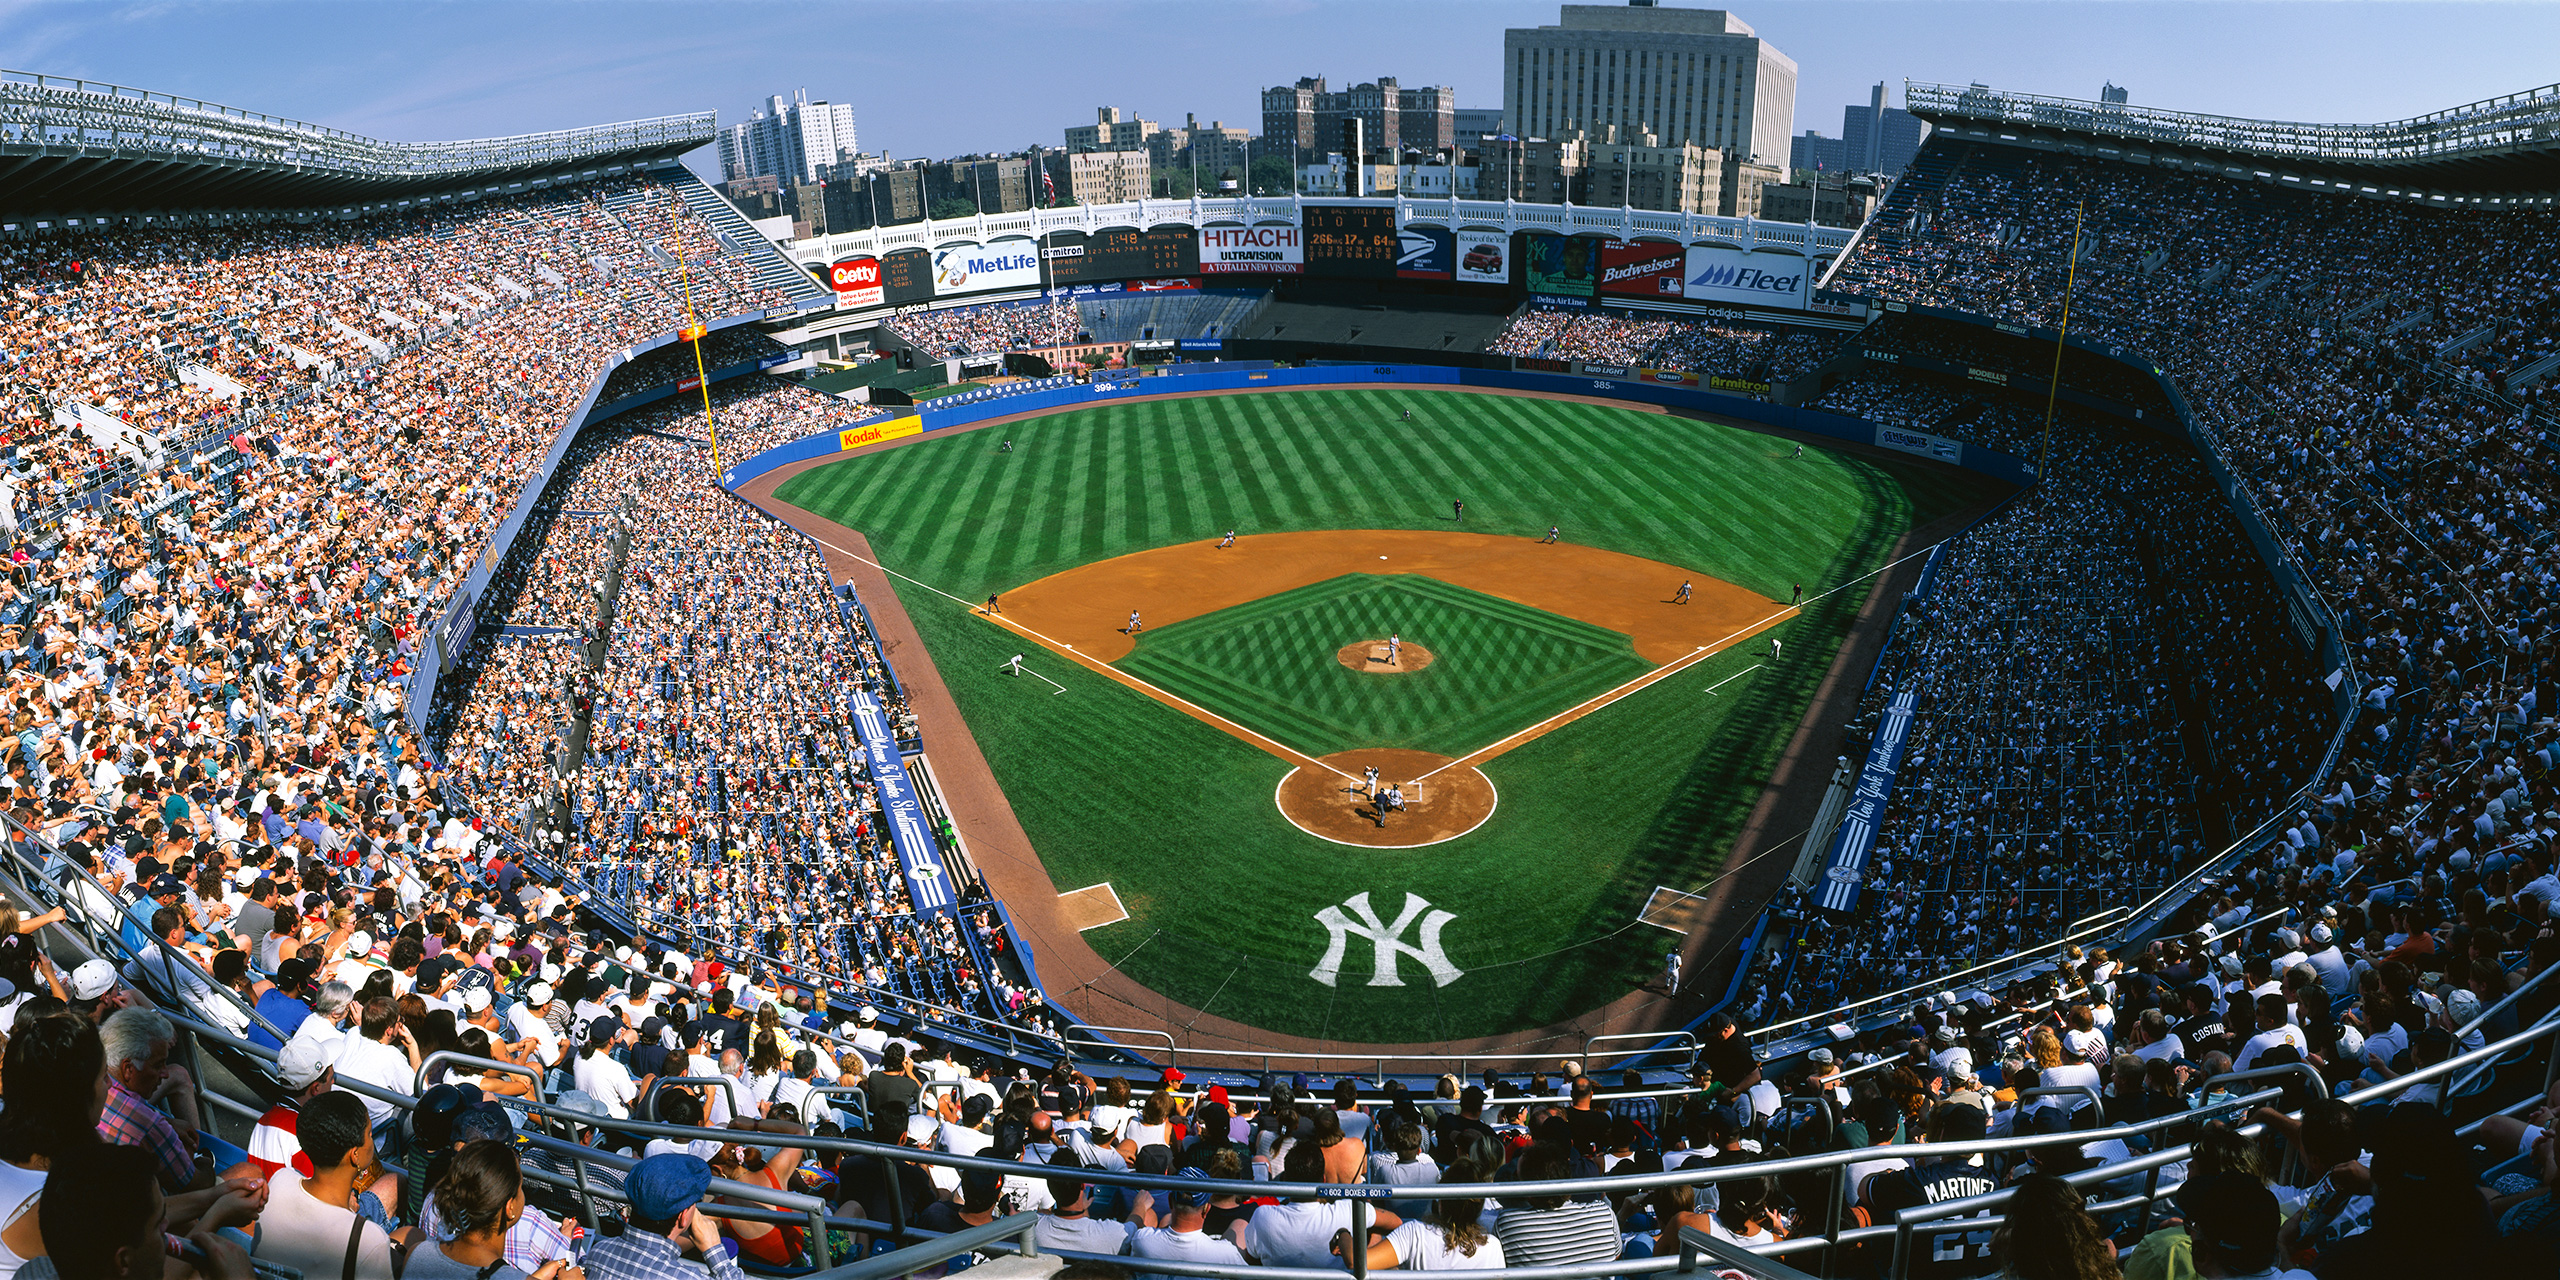 biggest baseball stadium in the world